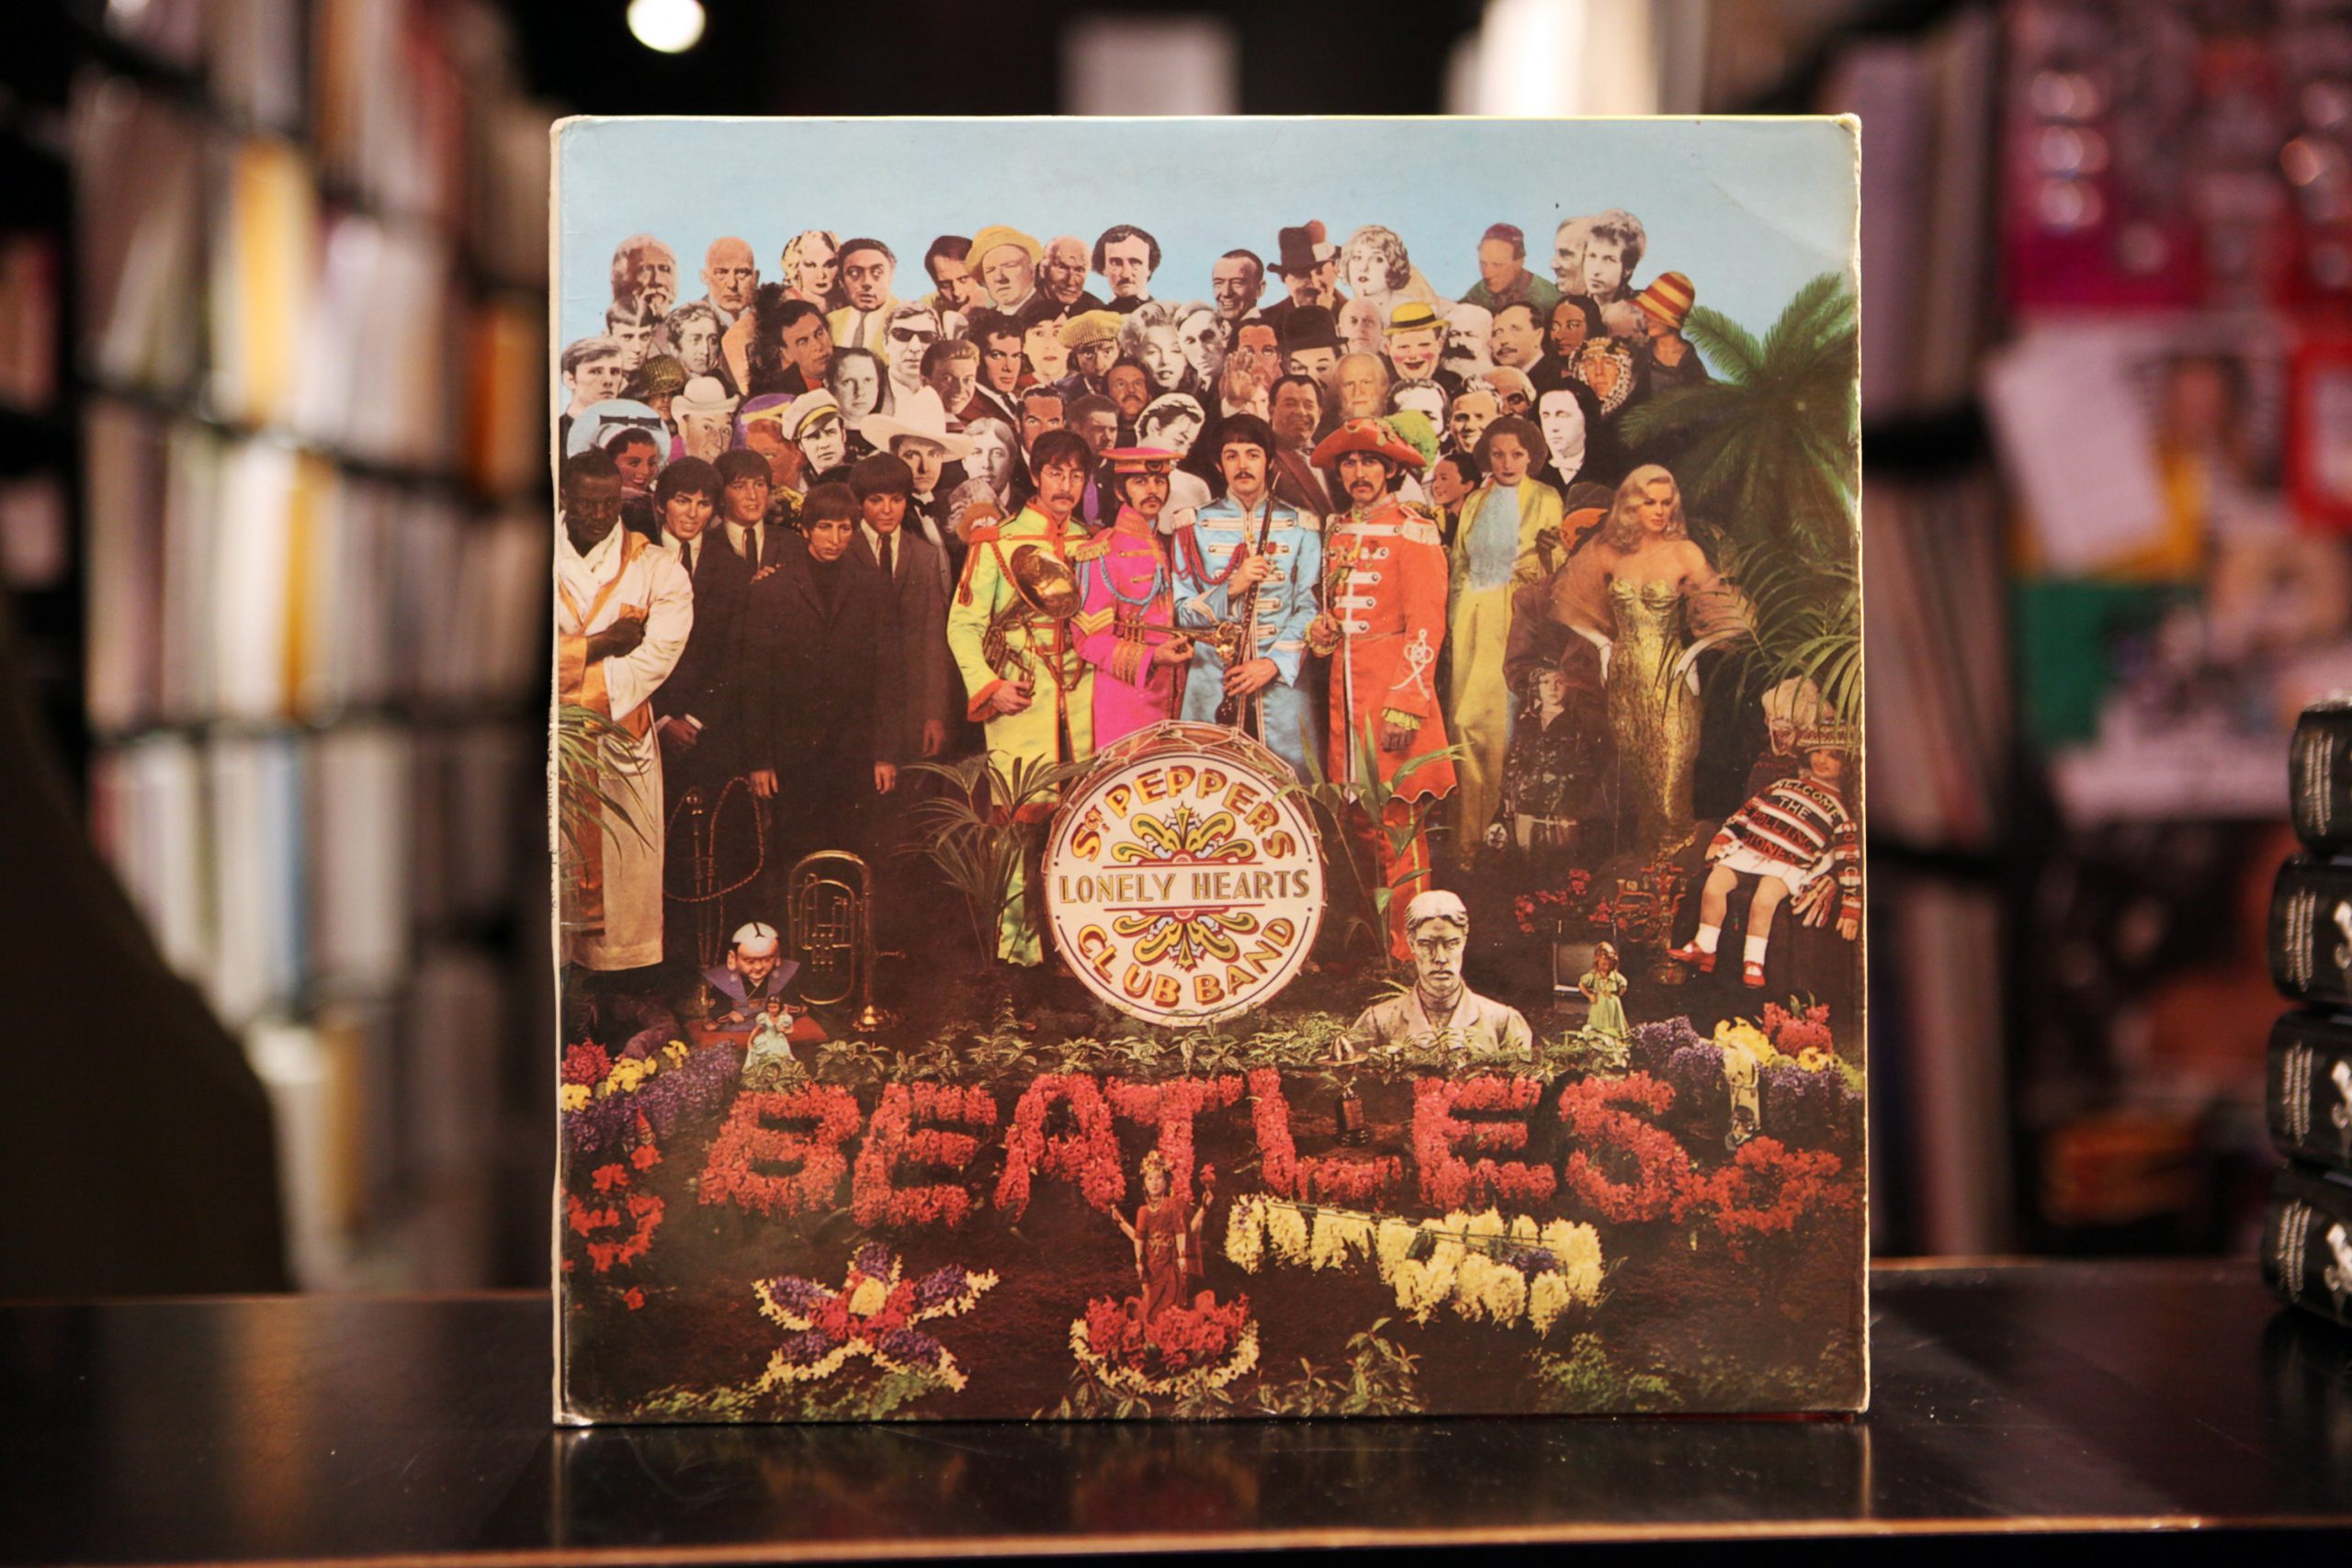 Paul McCartney Heard a Backward Message in The Beatles' 'Sgt. Pepper'